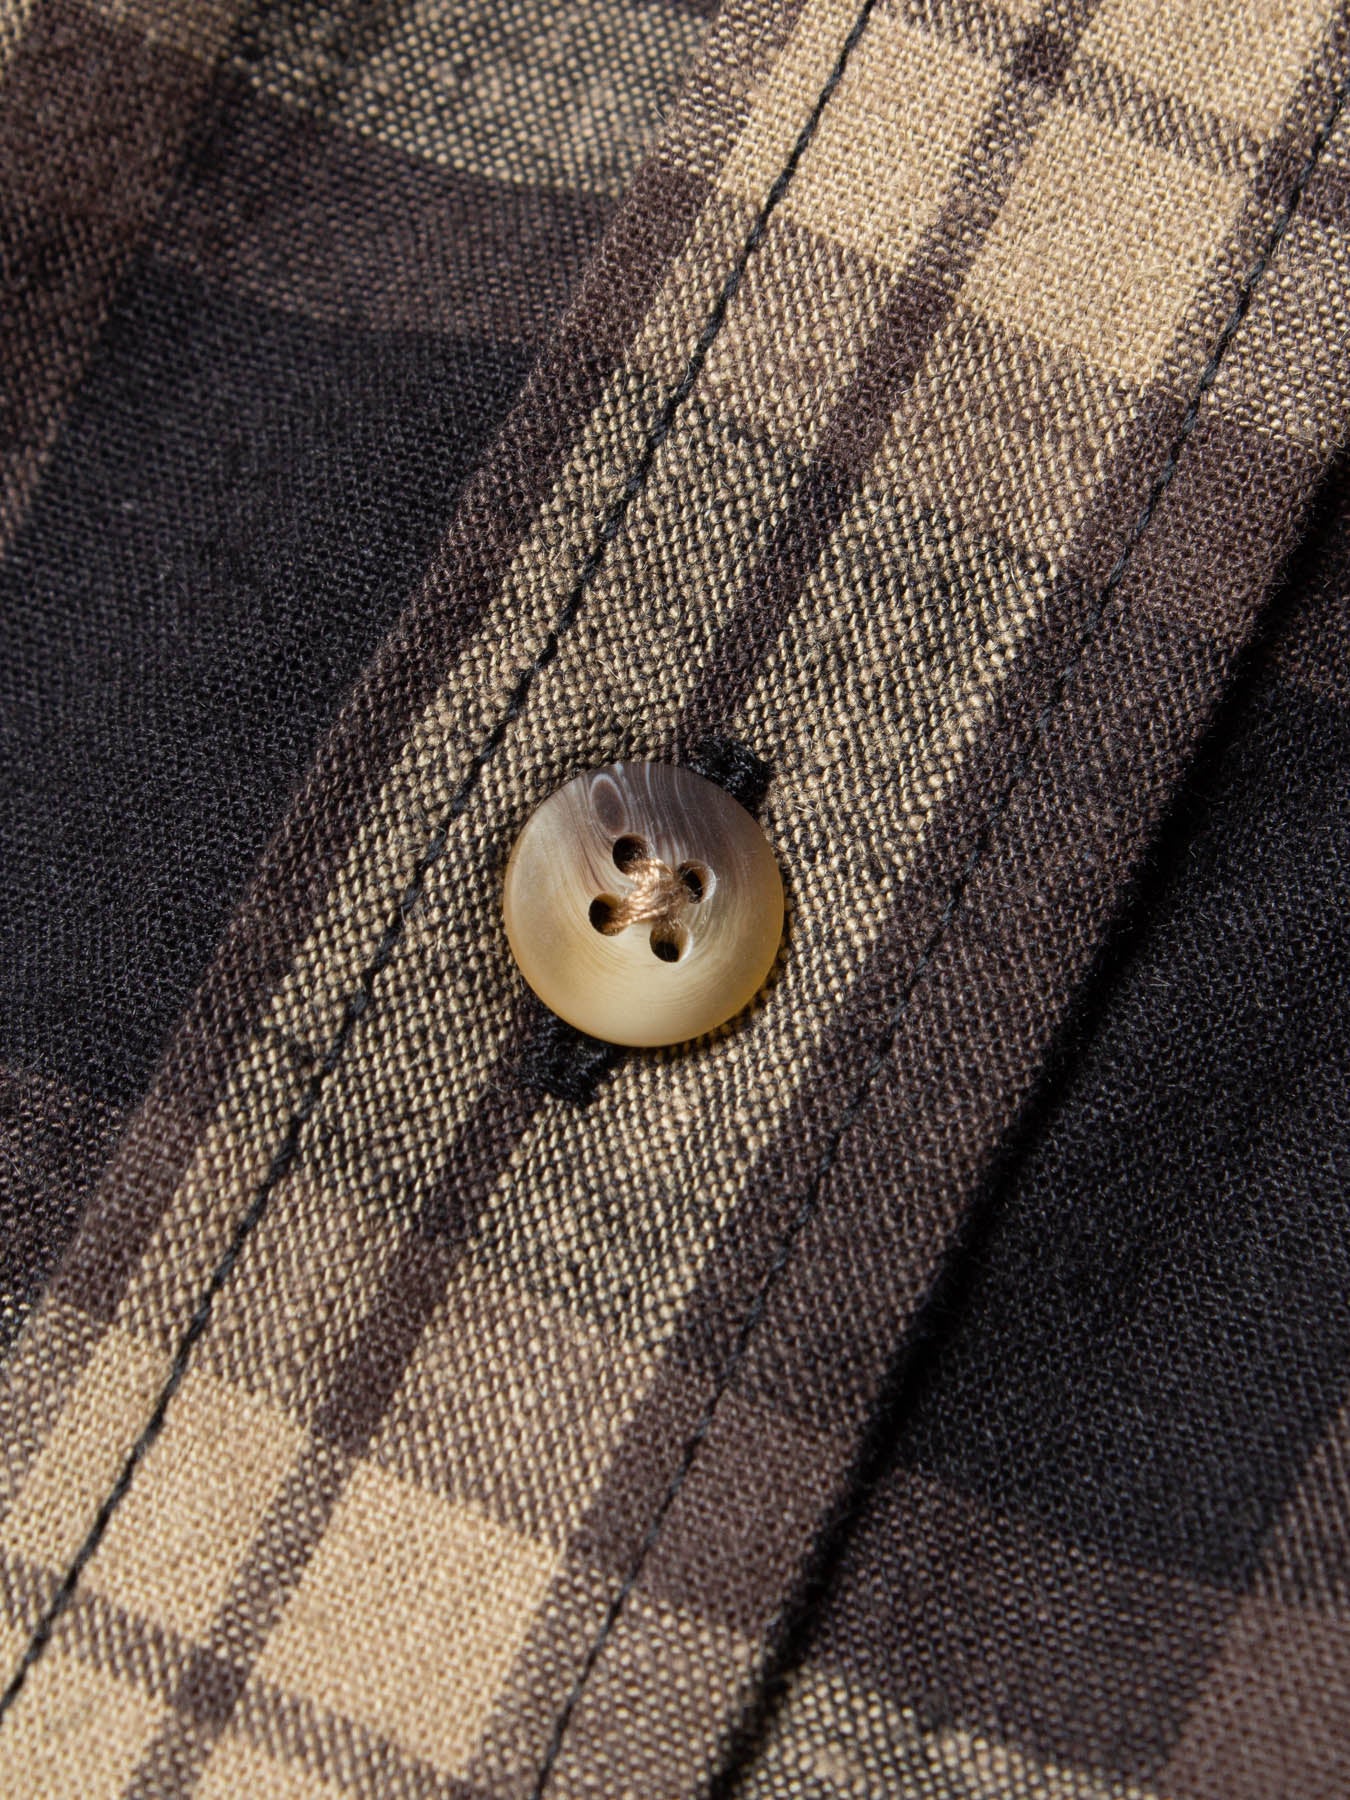 A button from the KESTIN Raeburn Shirt.